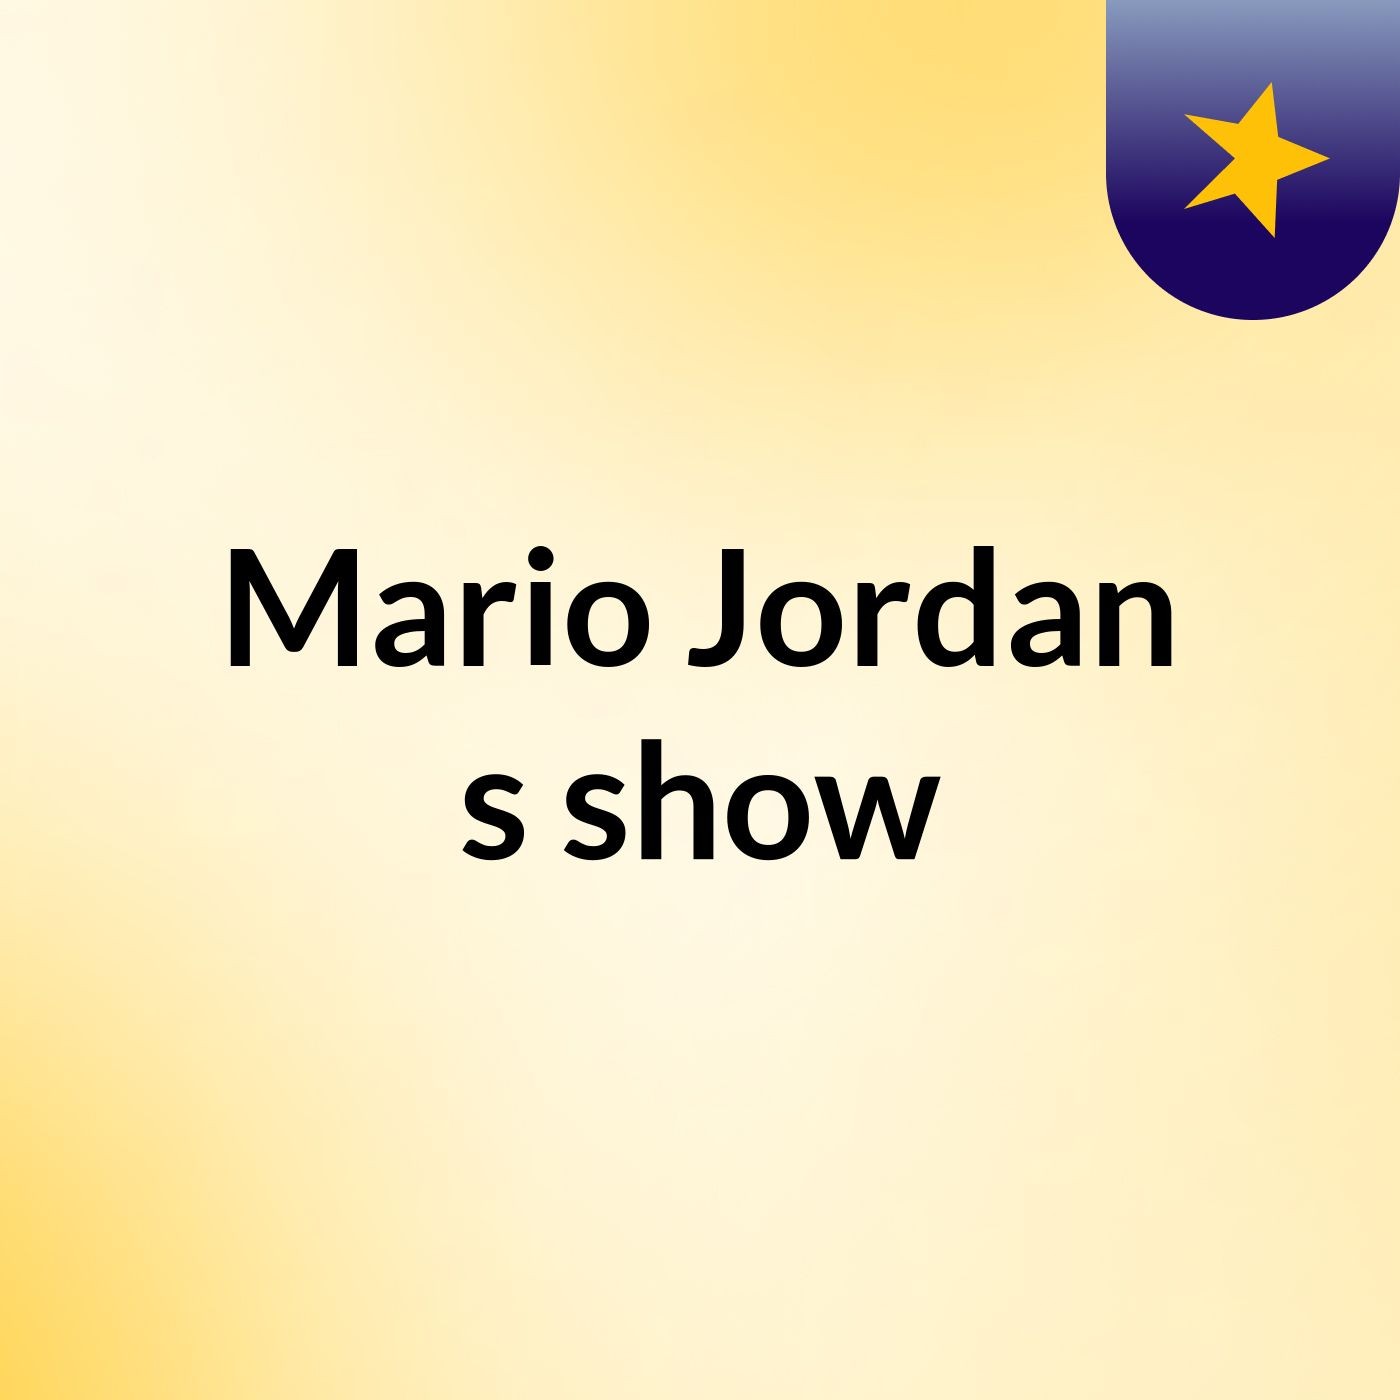 Mario Jordan's show